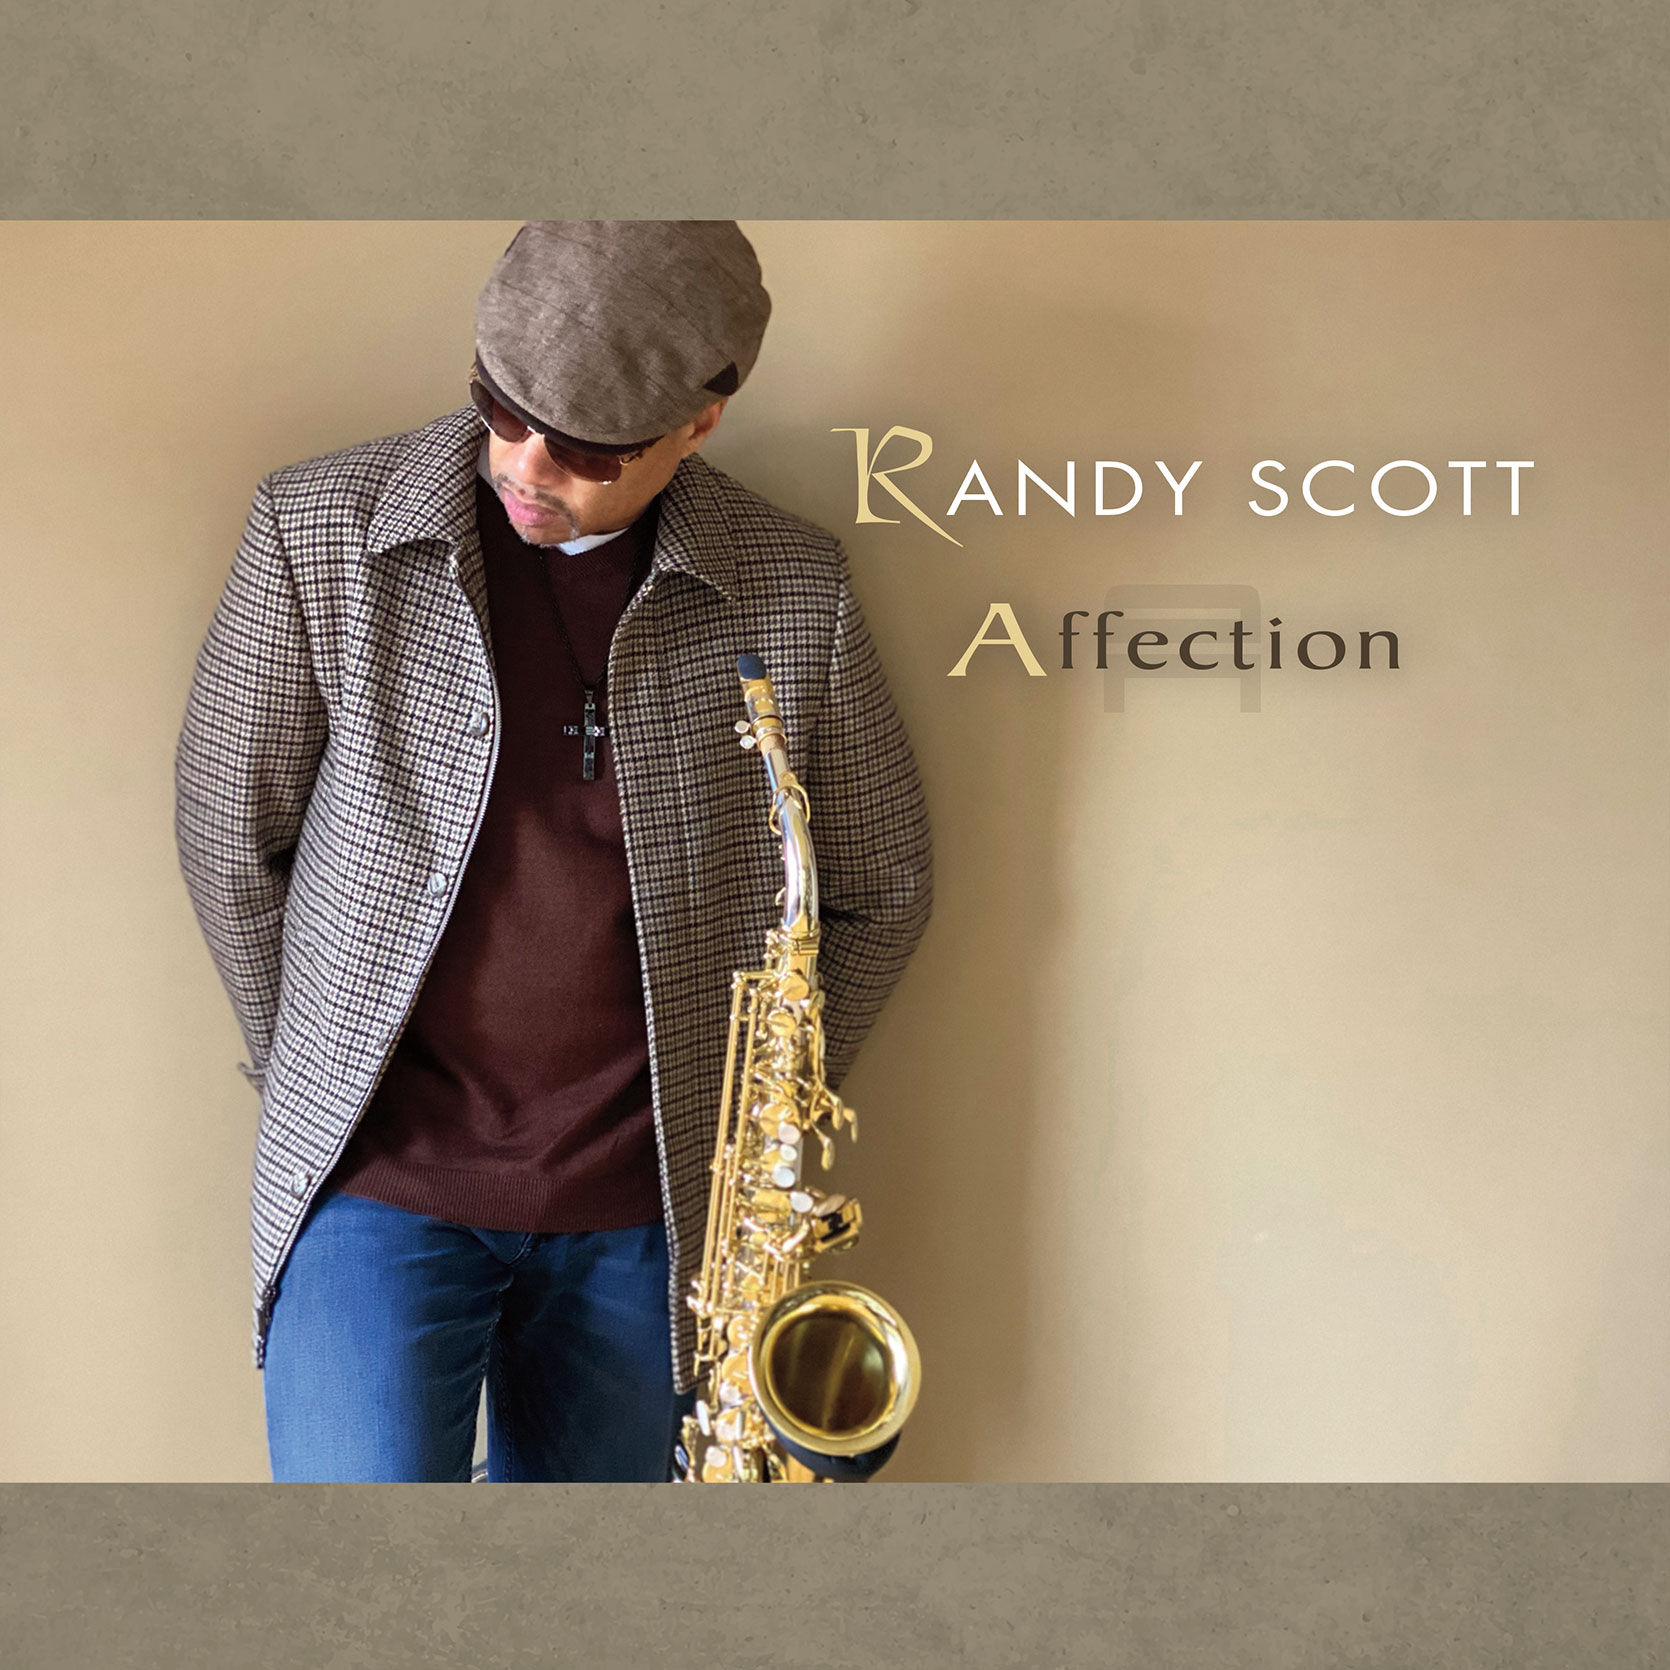 Listen to Affection by Smooth Jazz recording artist Randy Scott